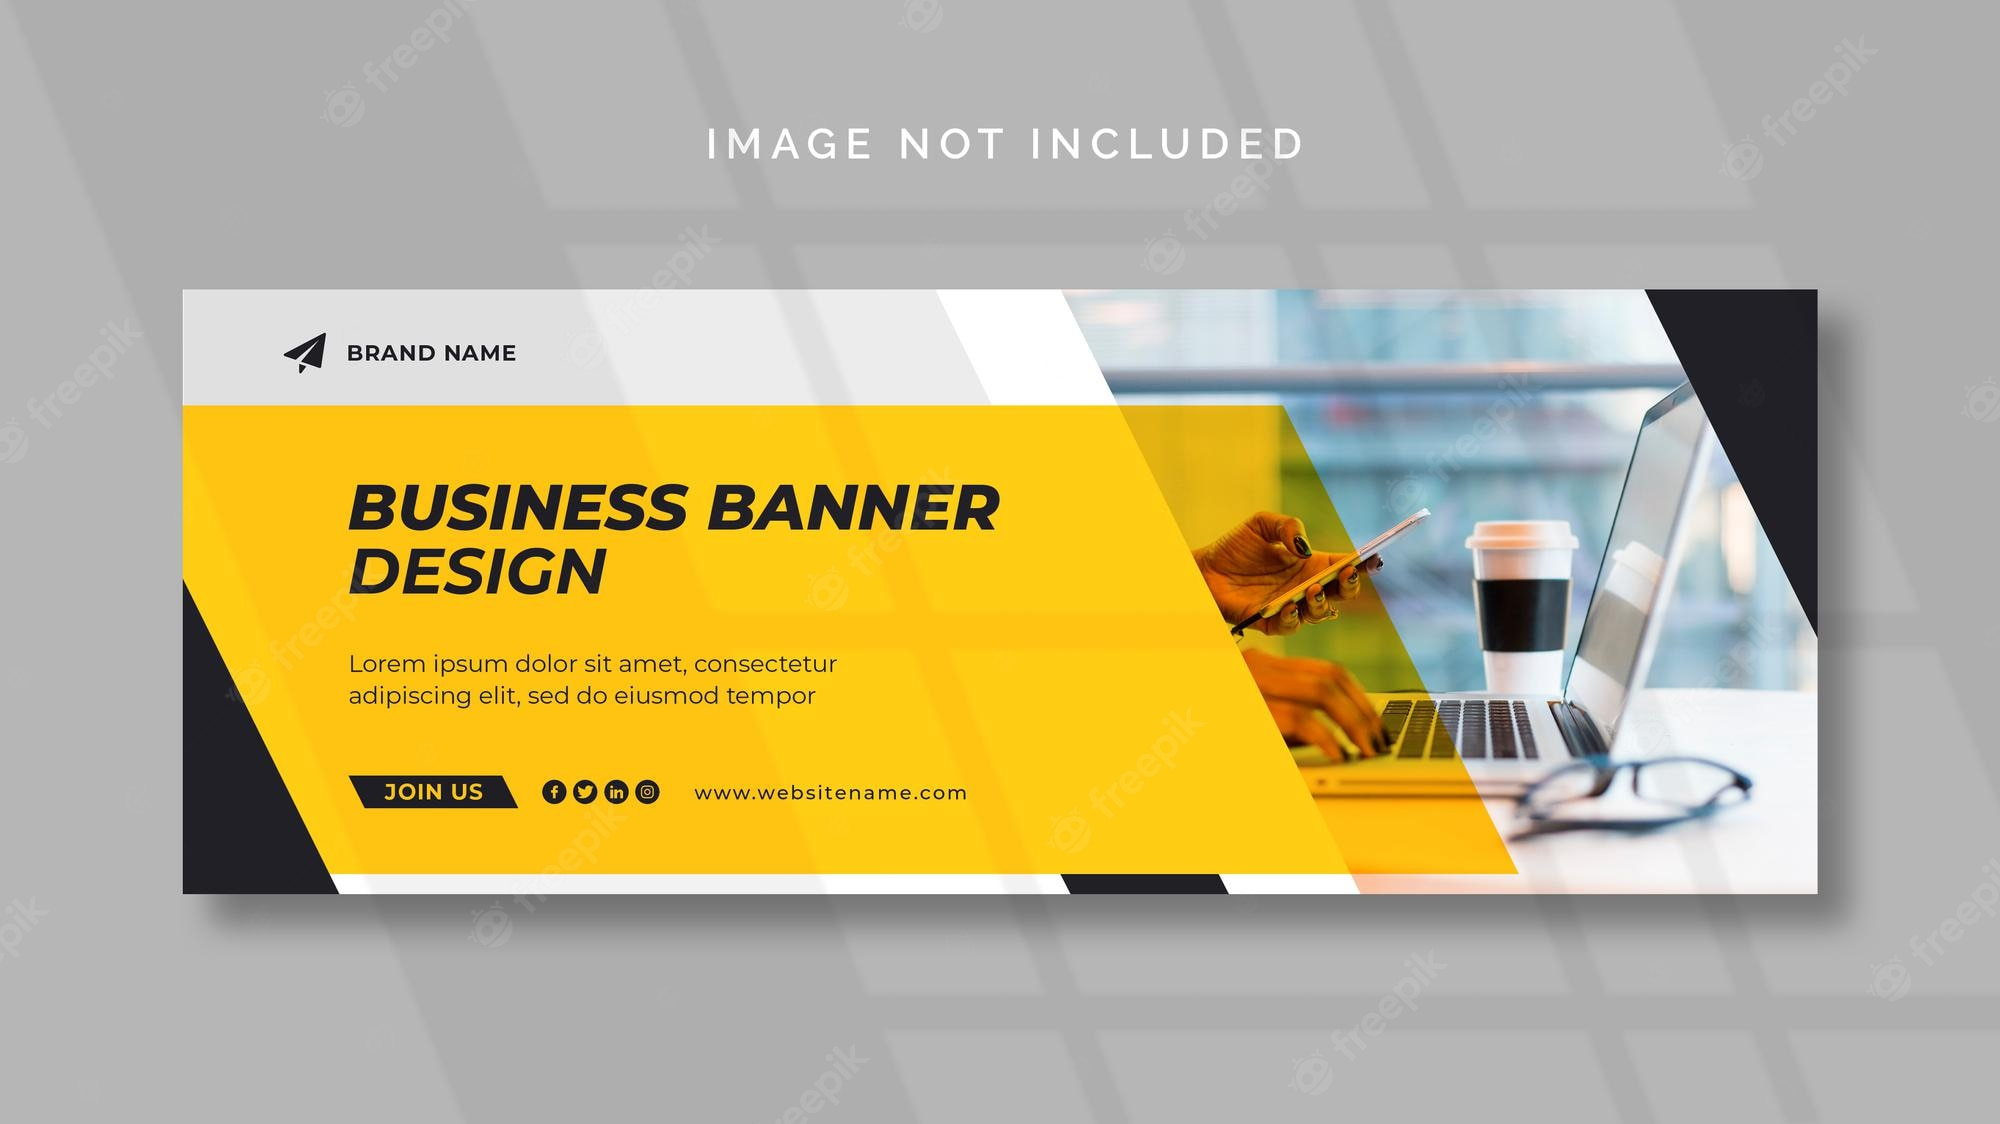 Website Banner – Free Vectors & PSD Download With Website Banner Design Templates